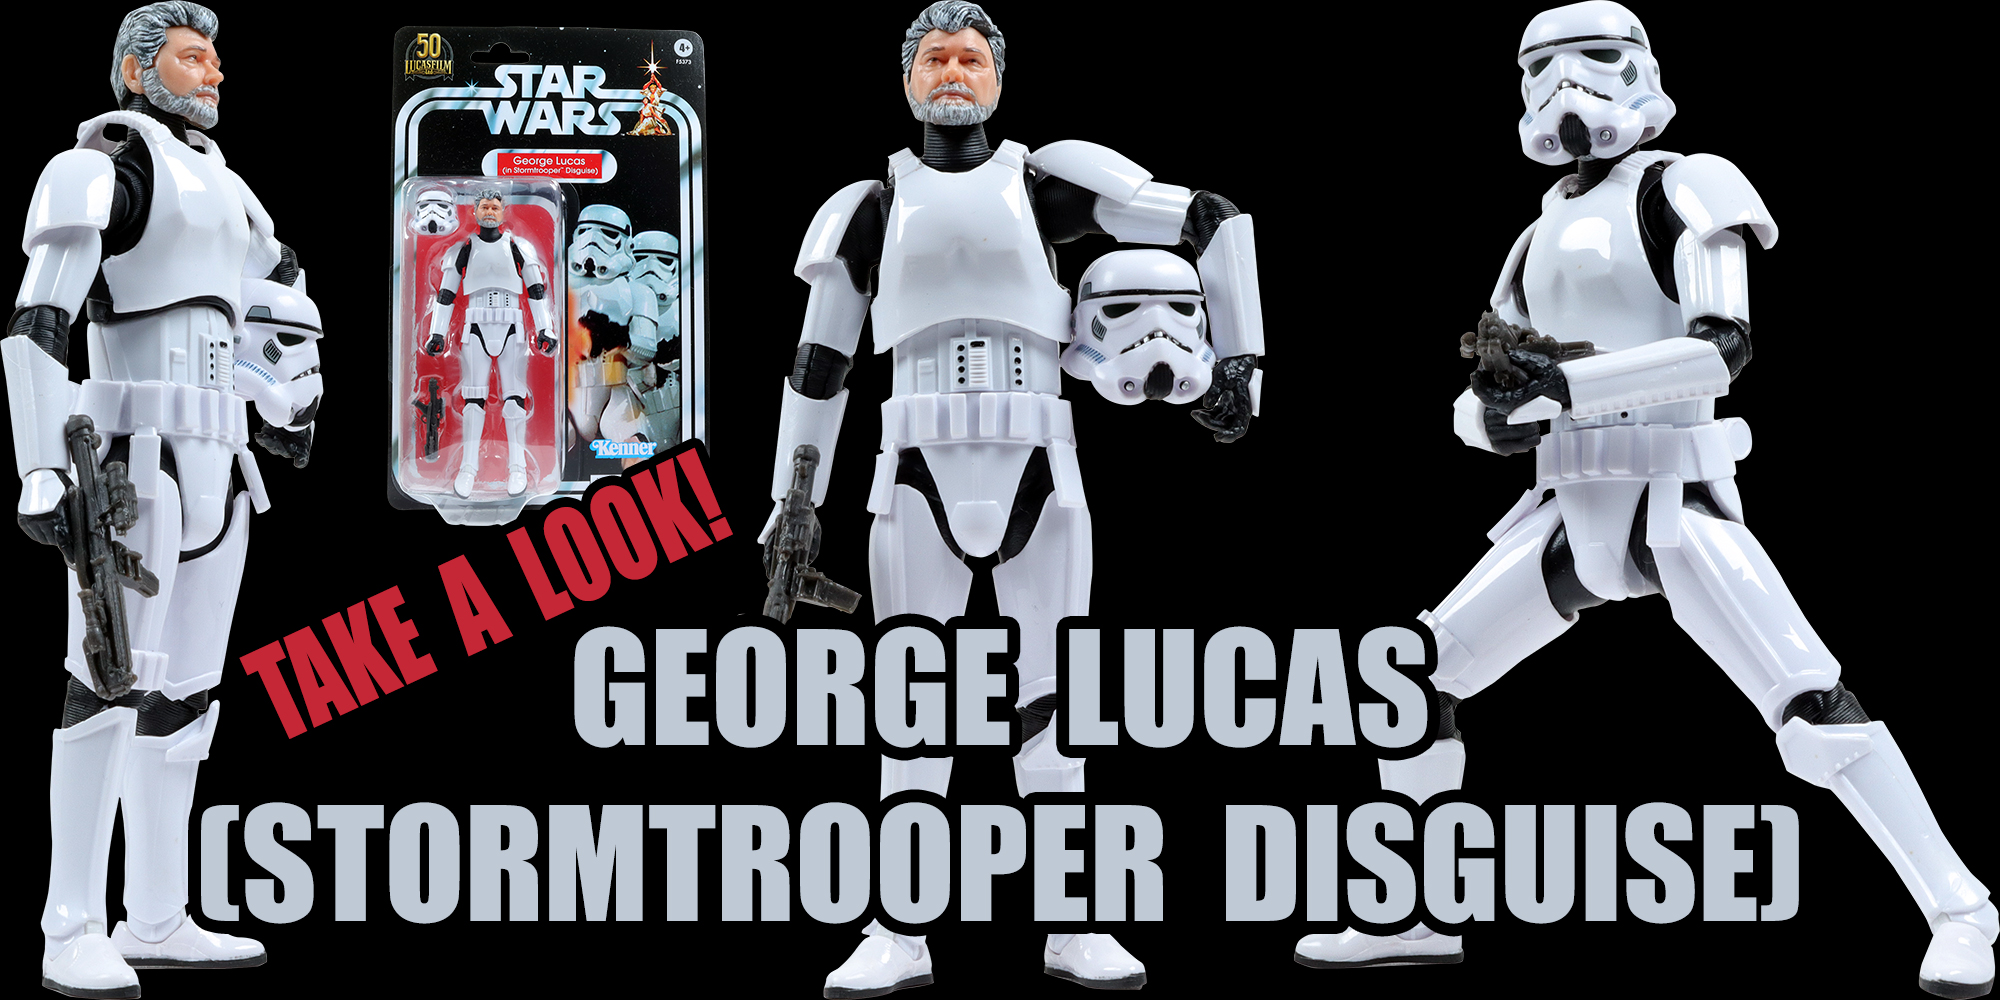 Black Series George Lucas Figure Added